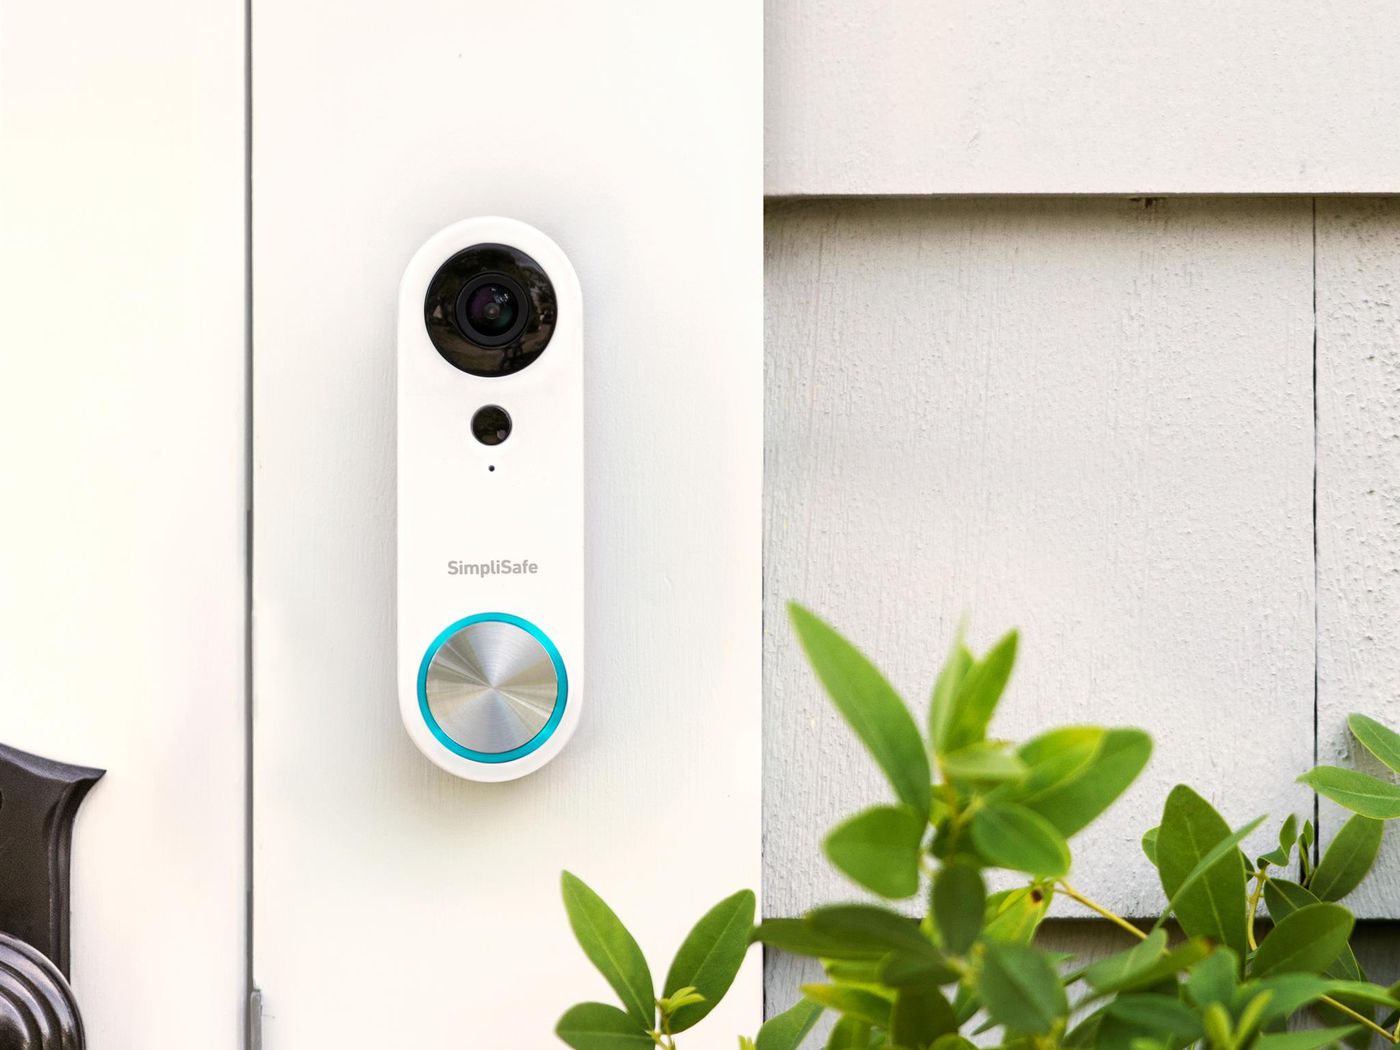 How To Install A SimpliSafe Doorbell